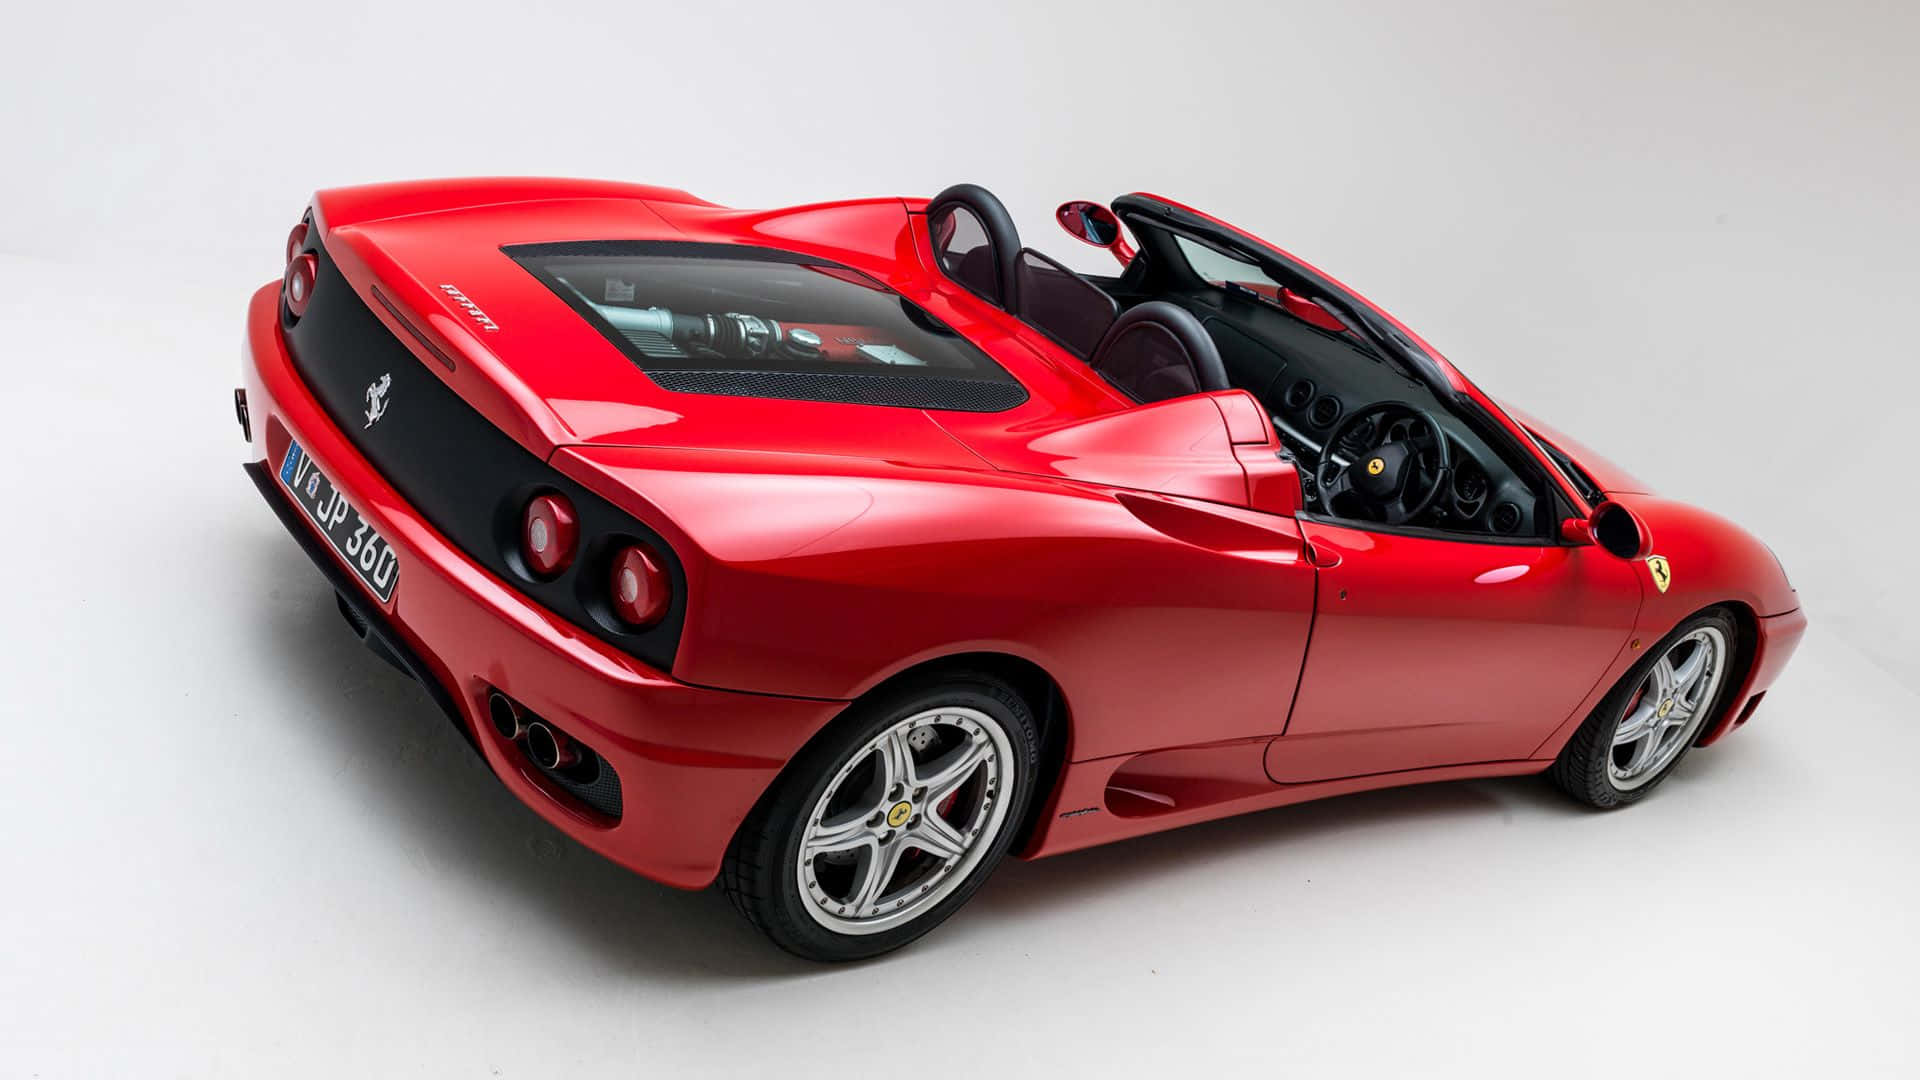 Stunning Red Ferrari 360 Modena in Action Wallpaper